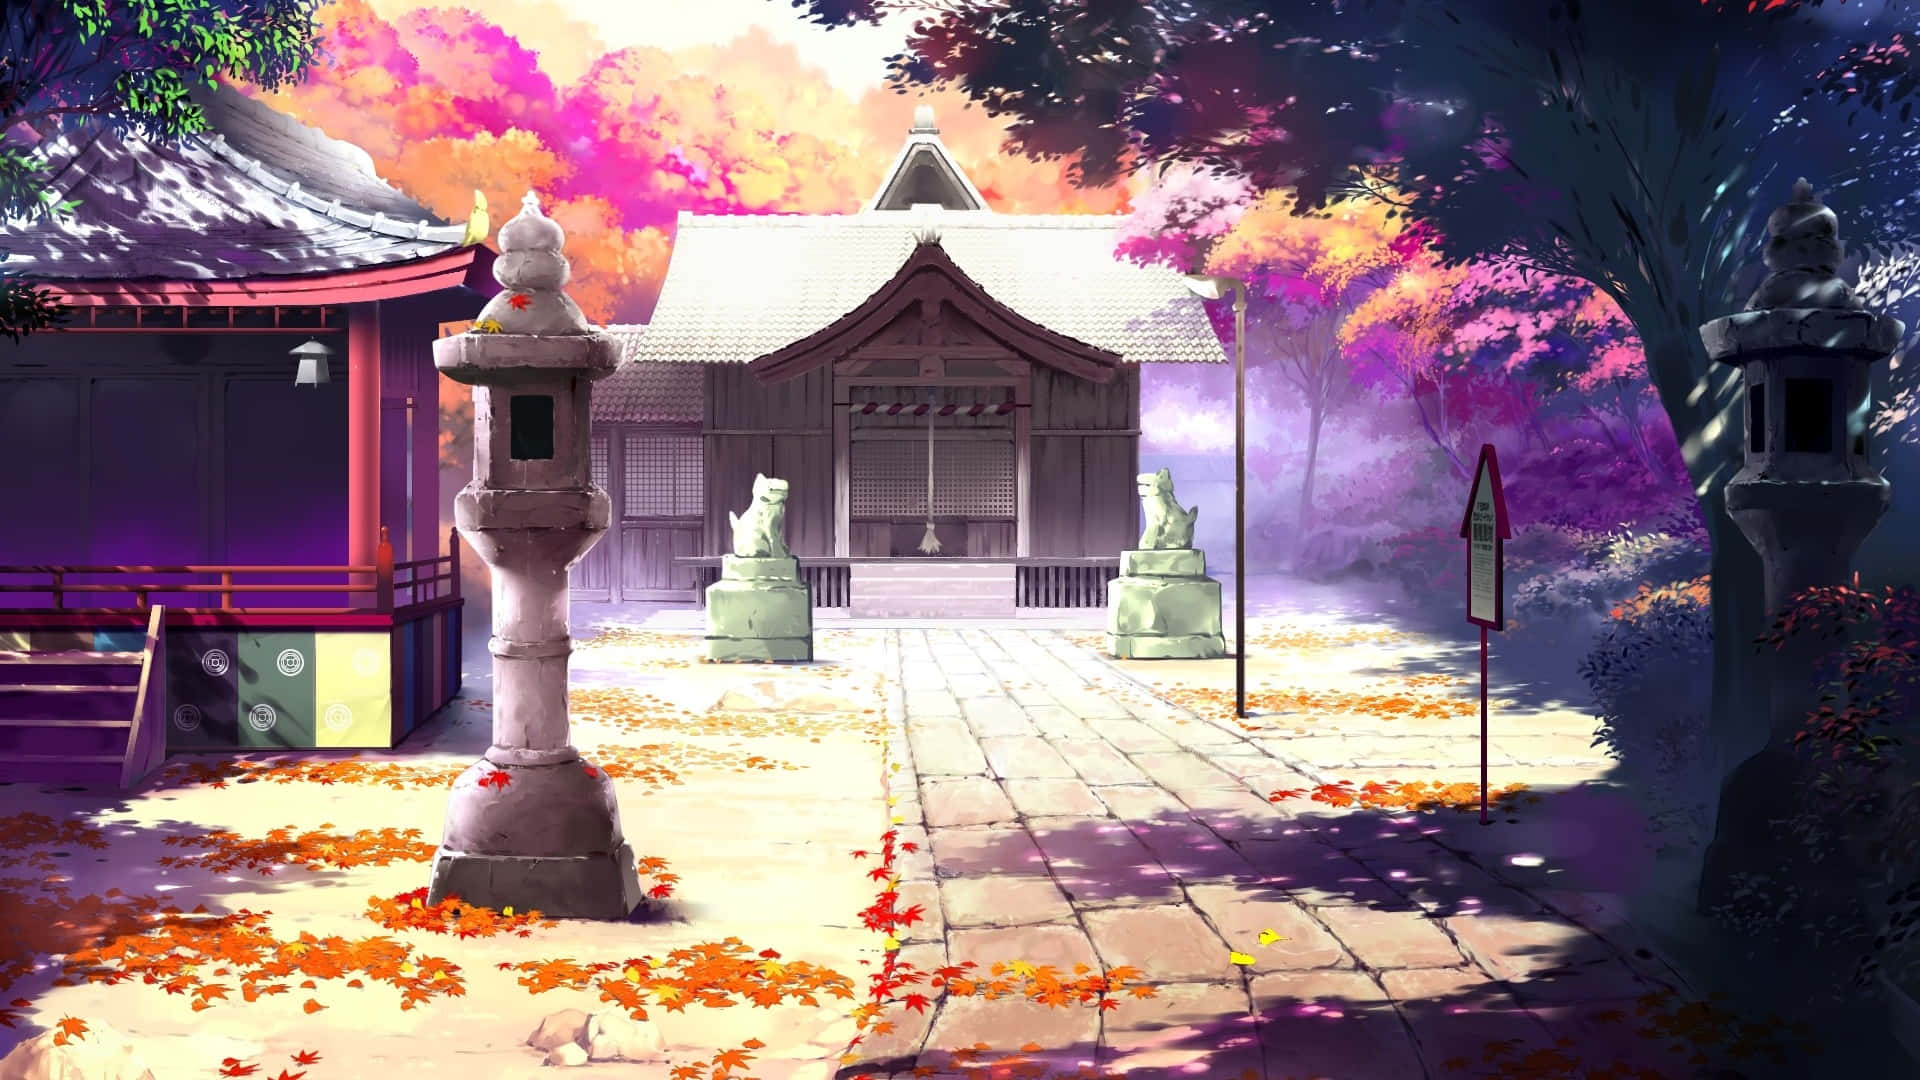 Encantadorpaisaje De Anime Con Árboles De Cerezo En Flor.